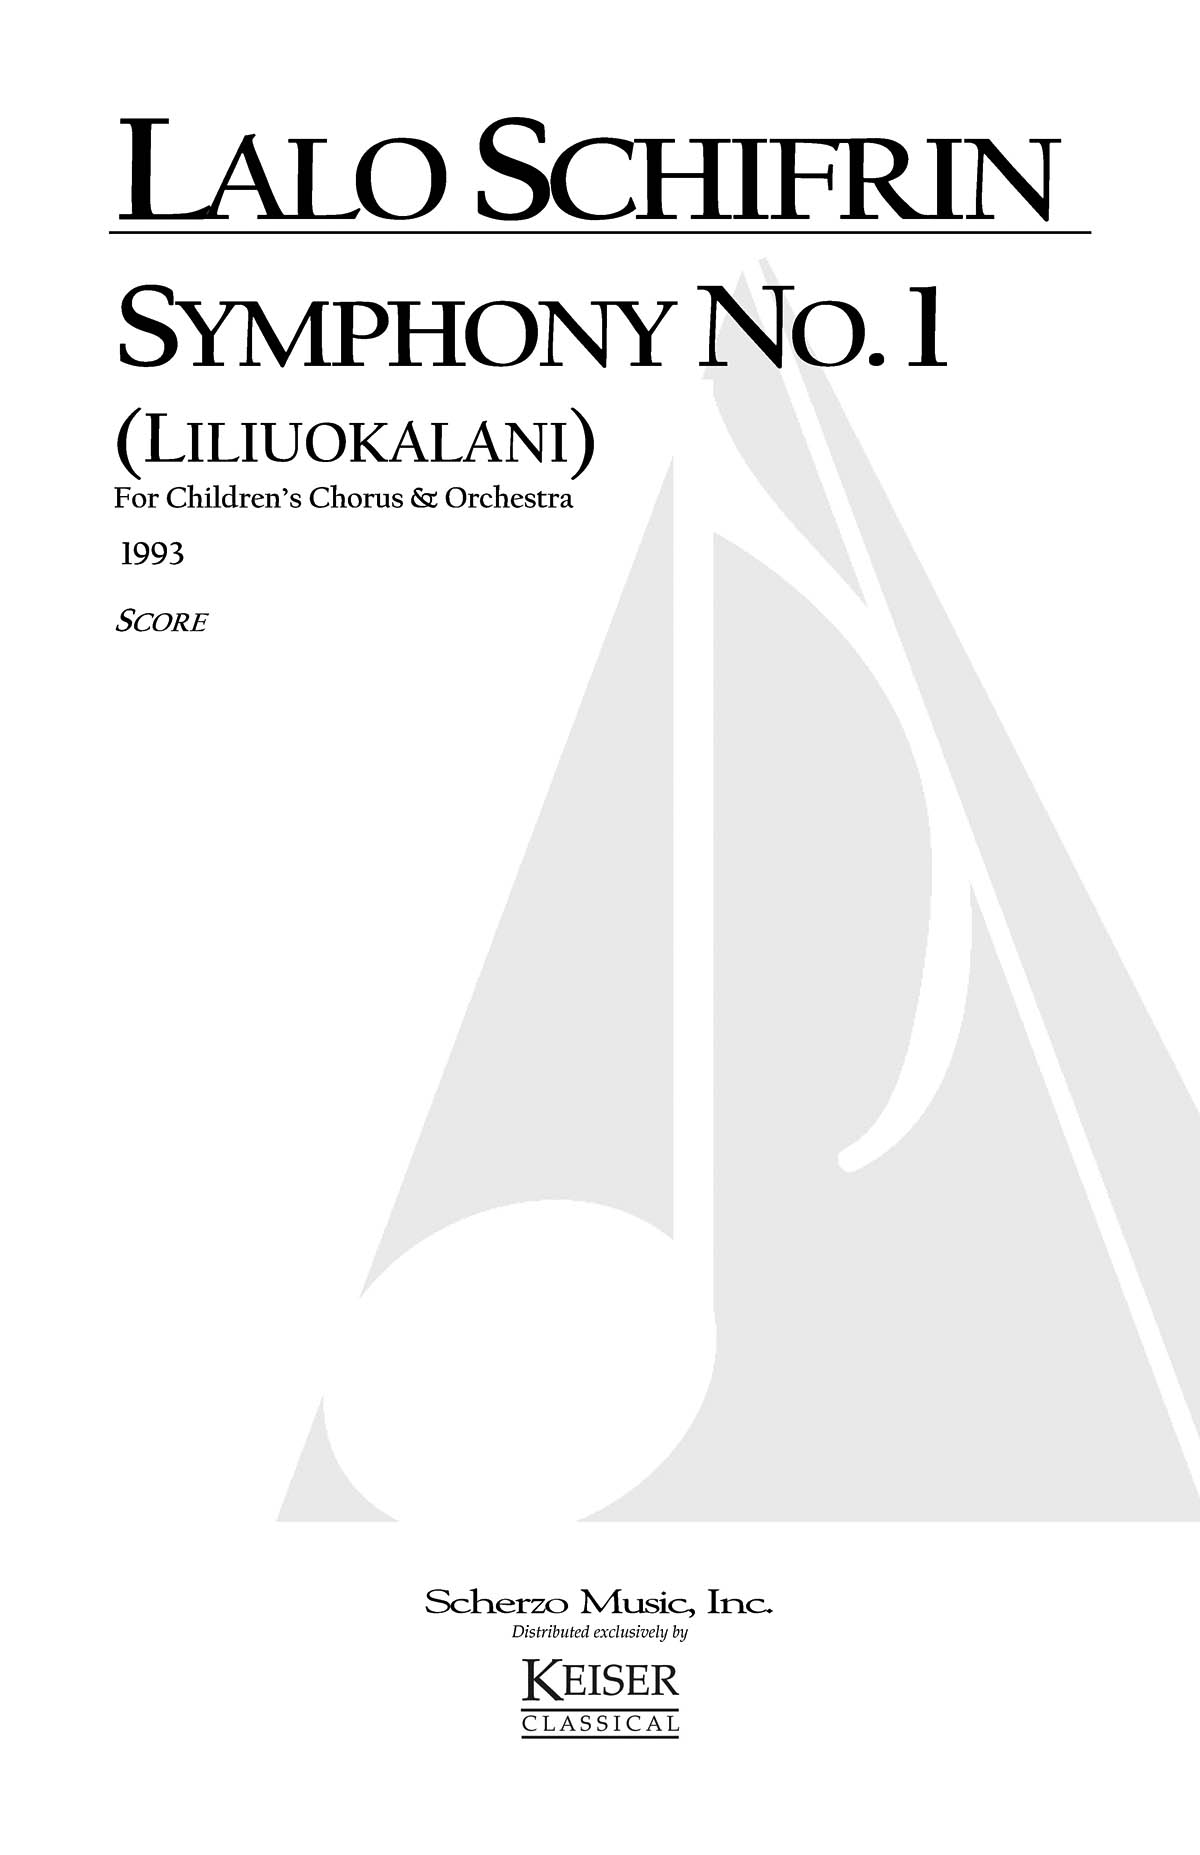 Lalo Schifrin: Symphony No. 1: Liliuokalani: Orchestra: Score